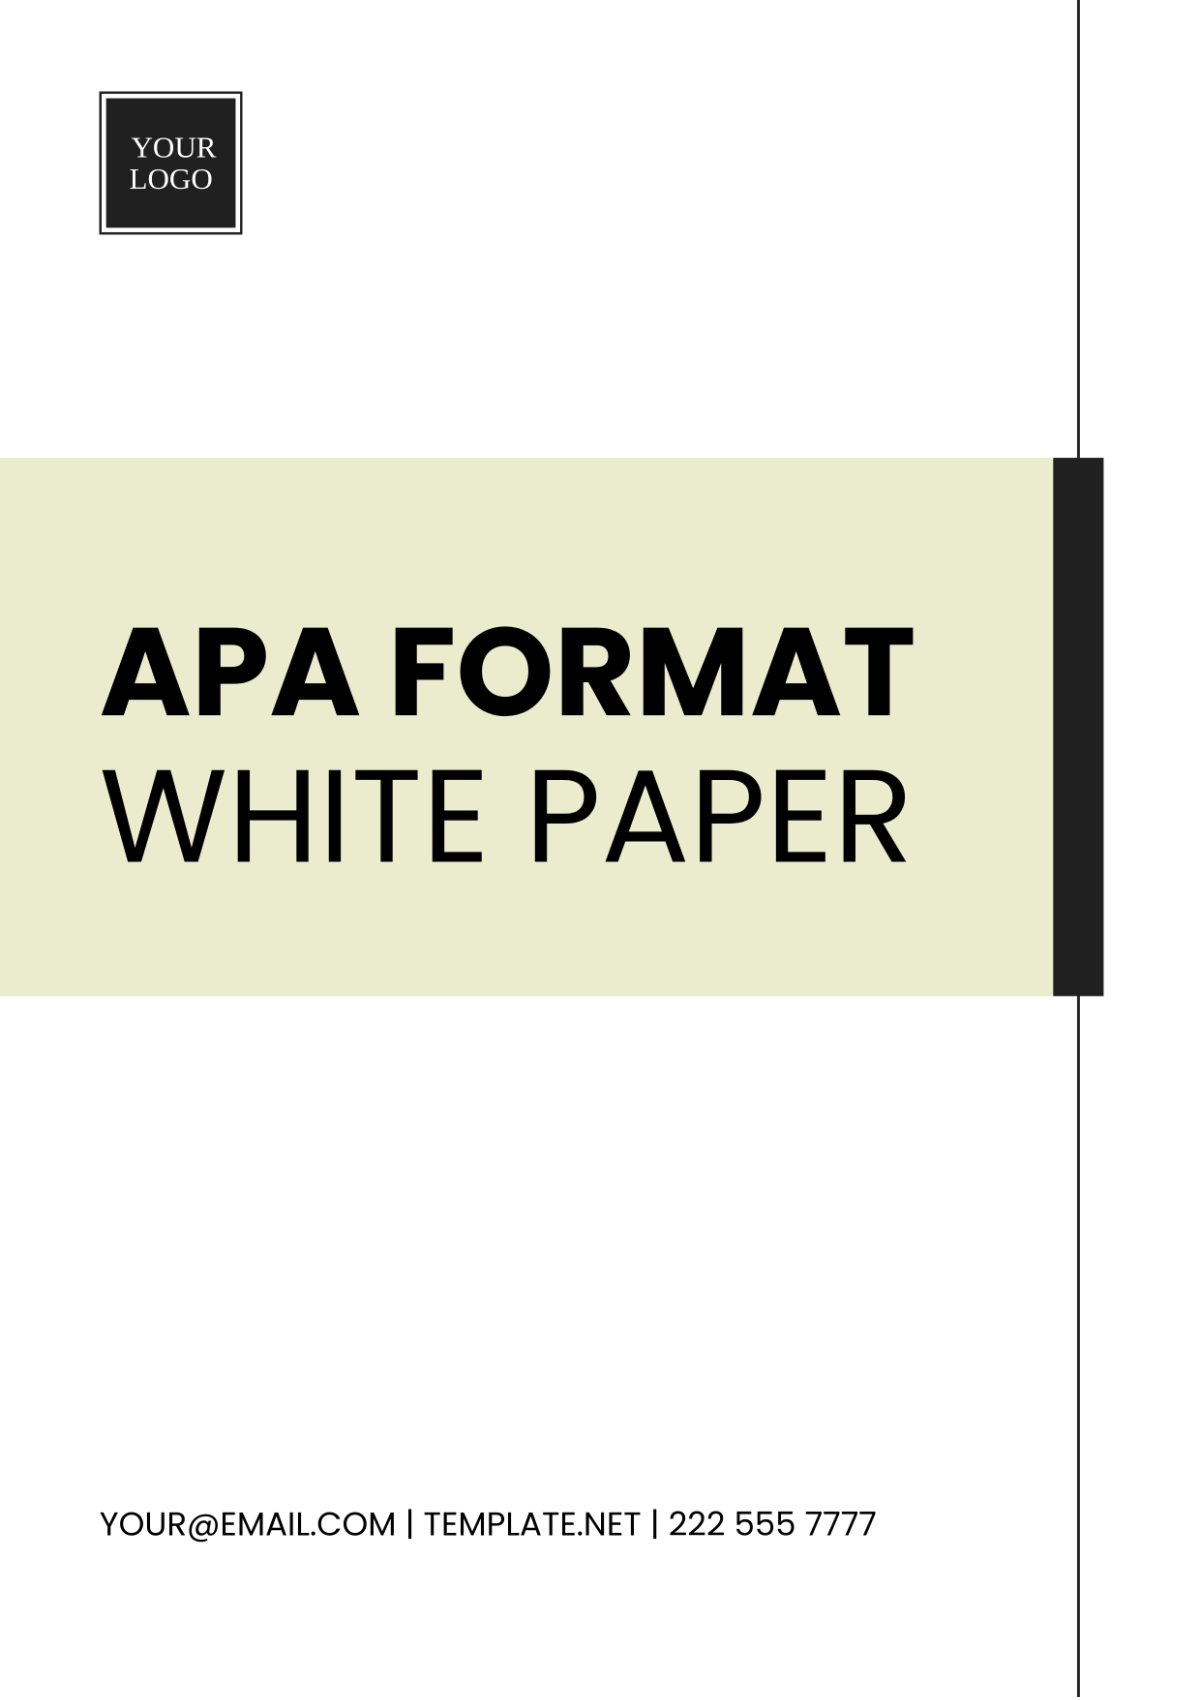 APA Format White Paper Template